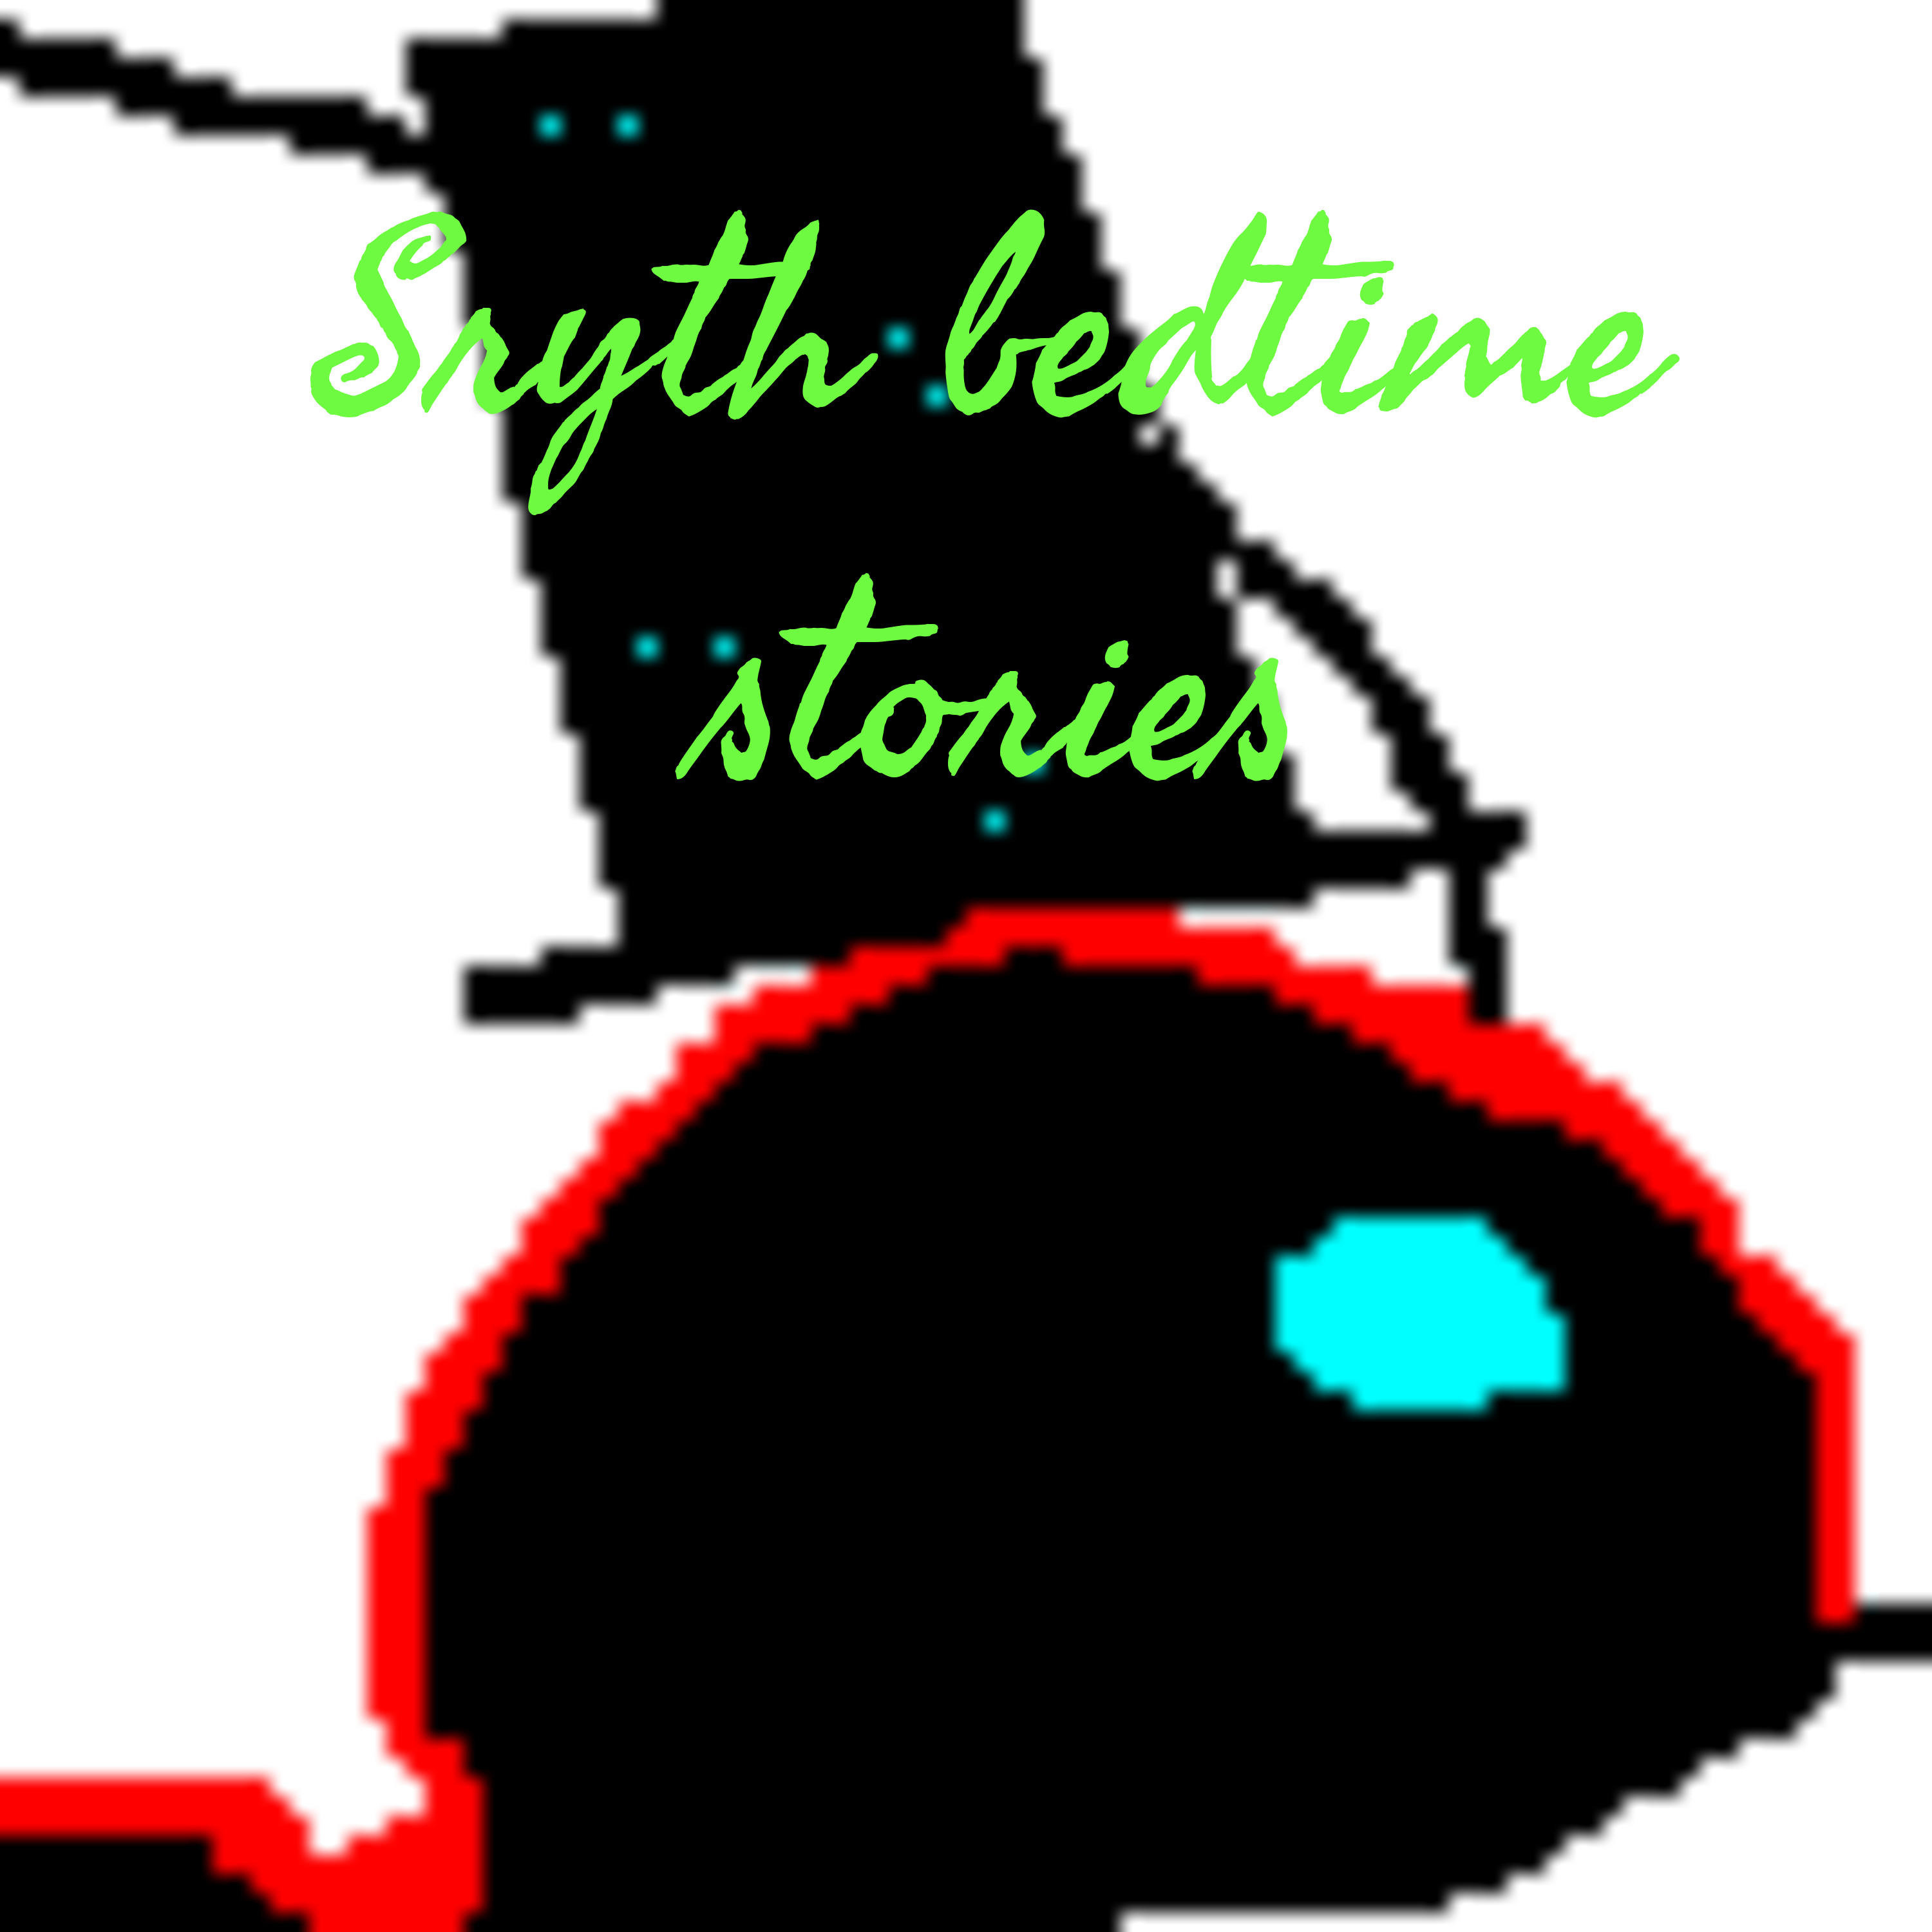 Sryth bedtime stories